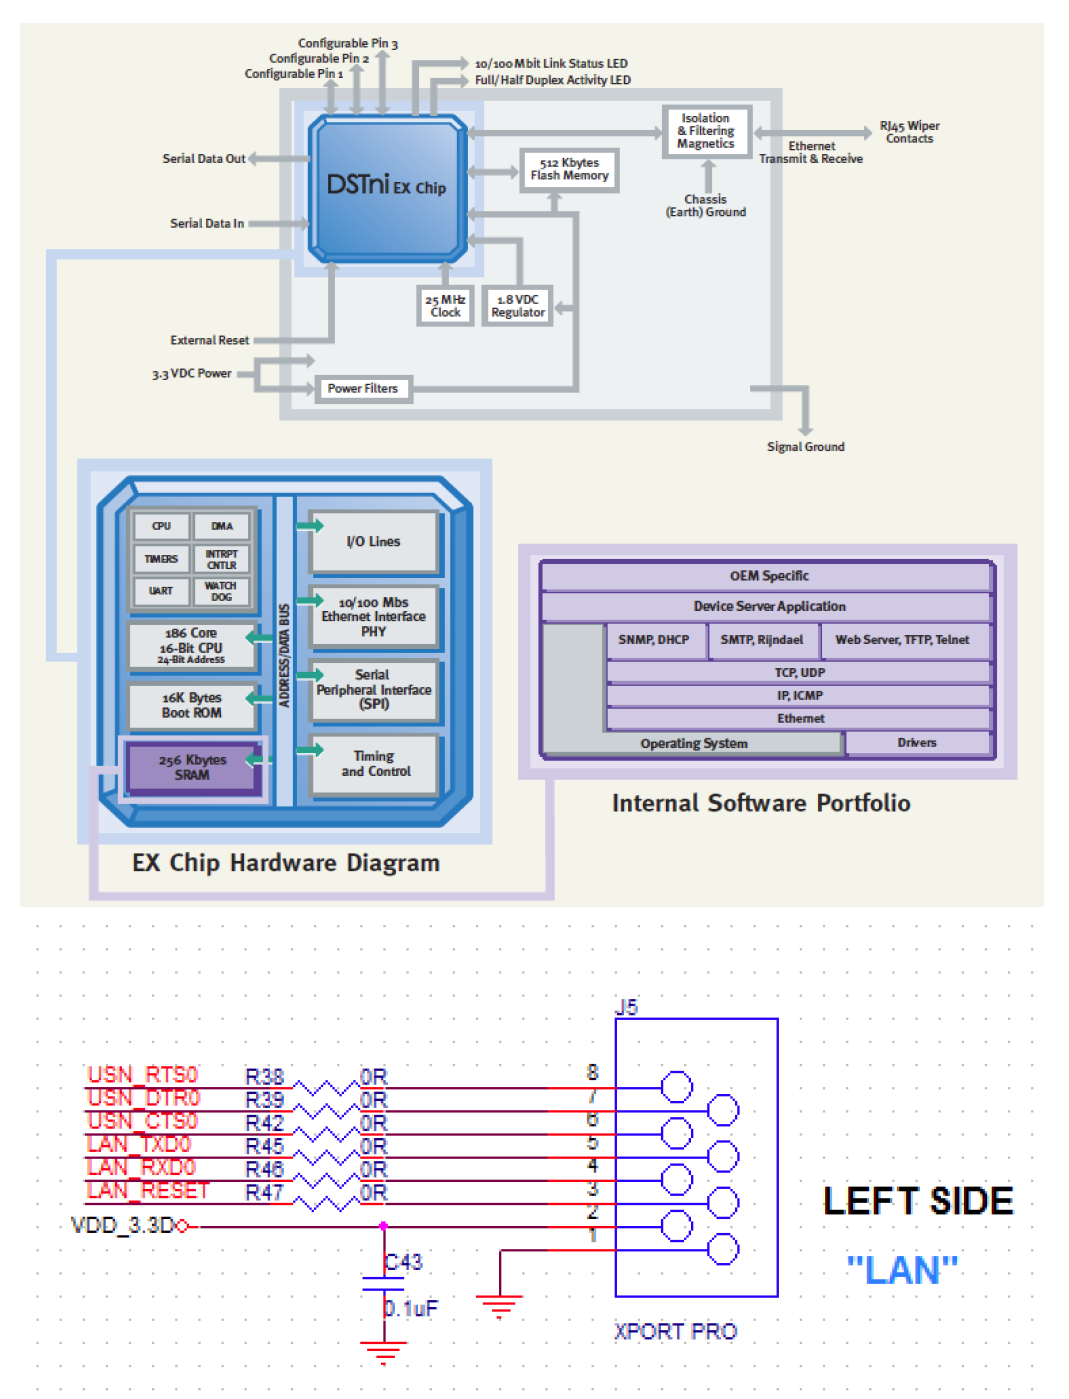 Ethernet Port 설계안